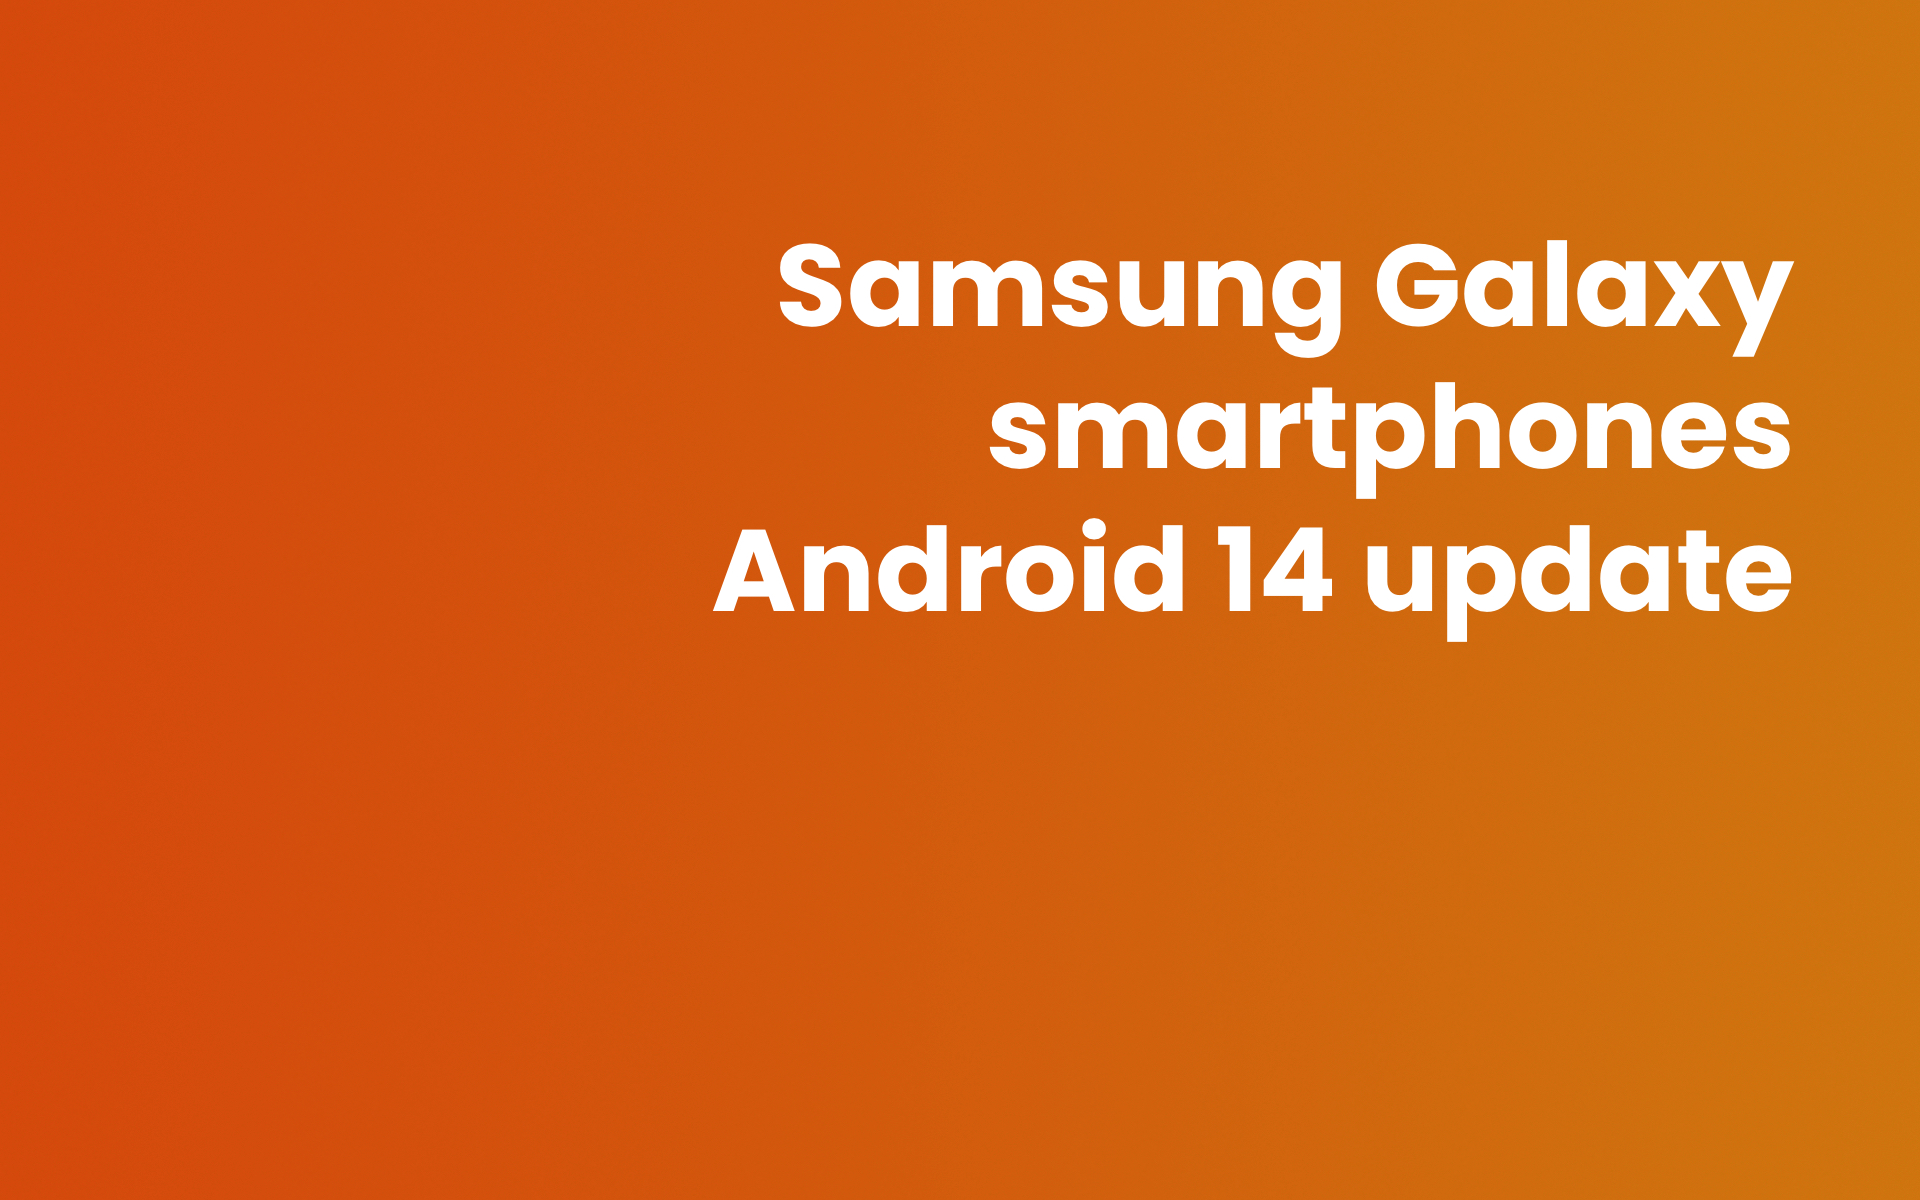 Samsung Galaxy smartphones Android 14 update